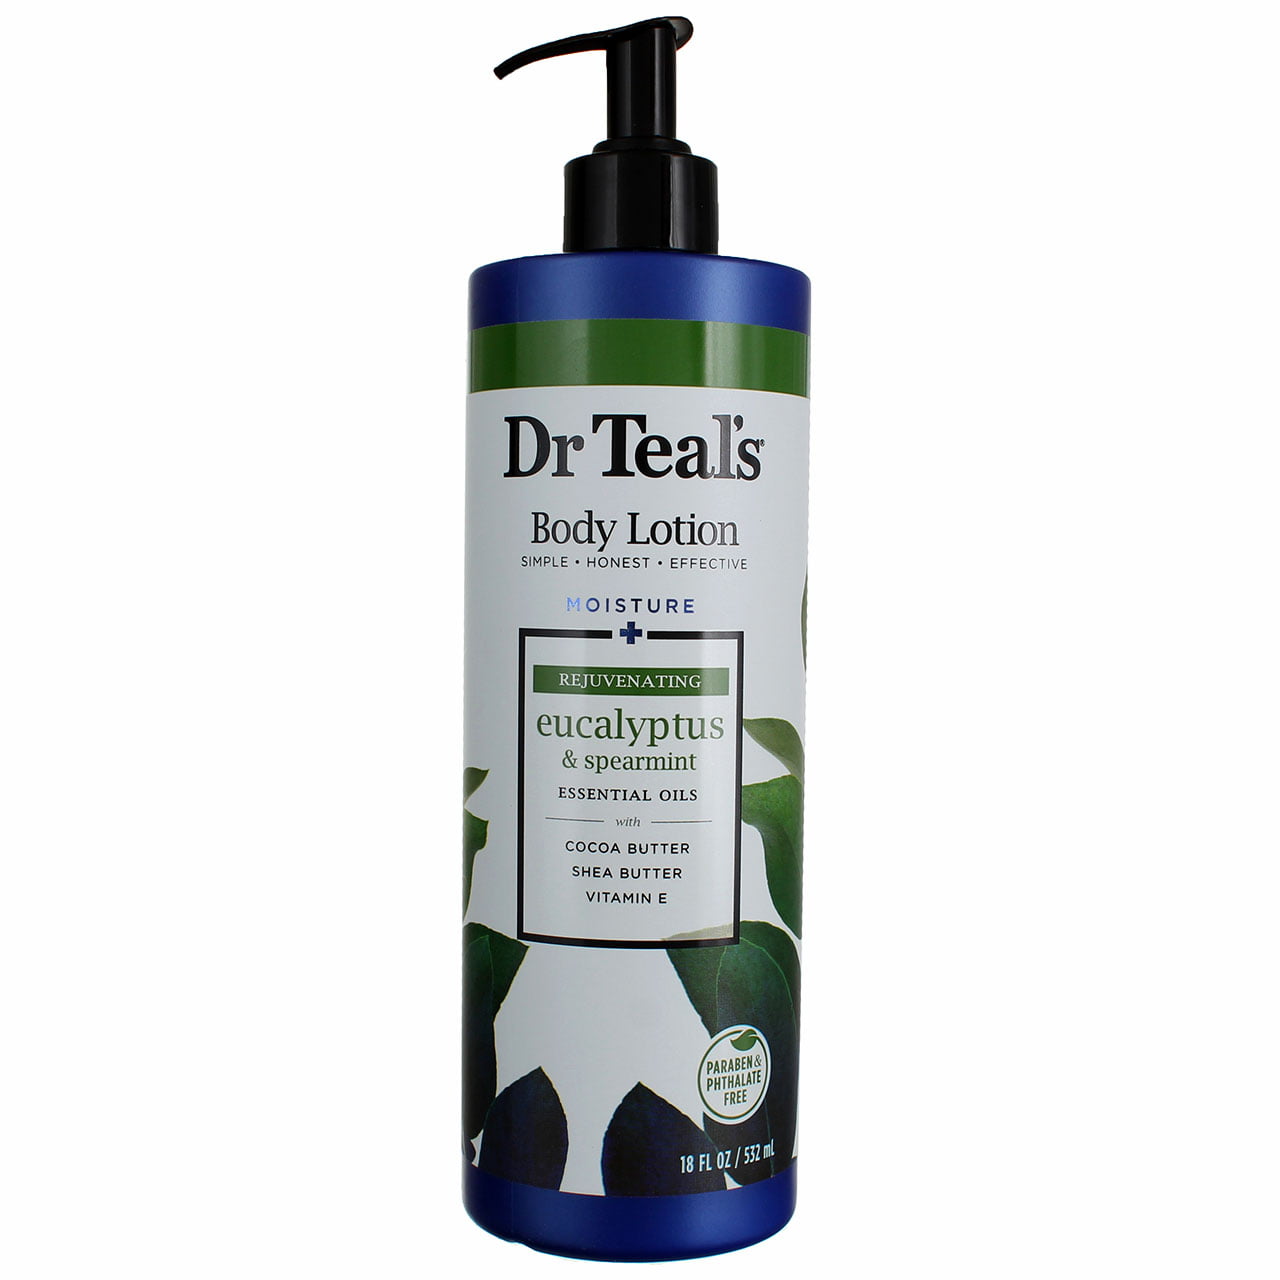 Dr Teal's Body Lotion Moisture Rejuvenating/Refreshing Eucalyptus & Spearmint, 18 fl oz